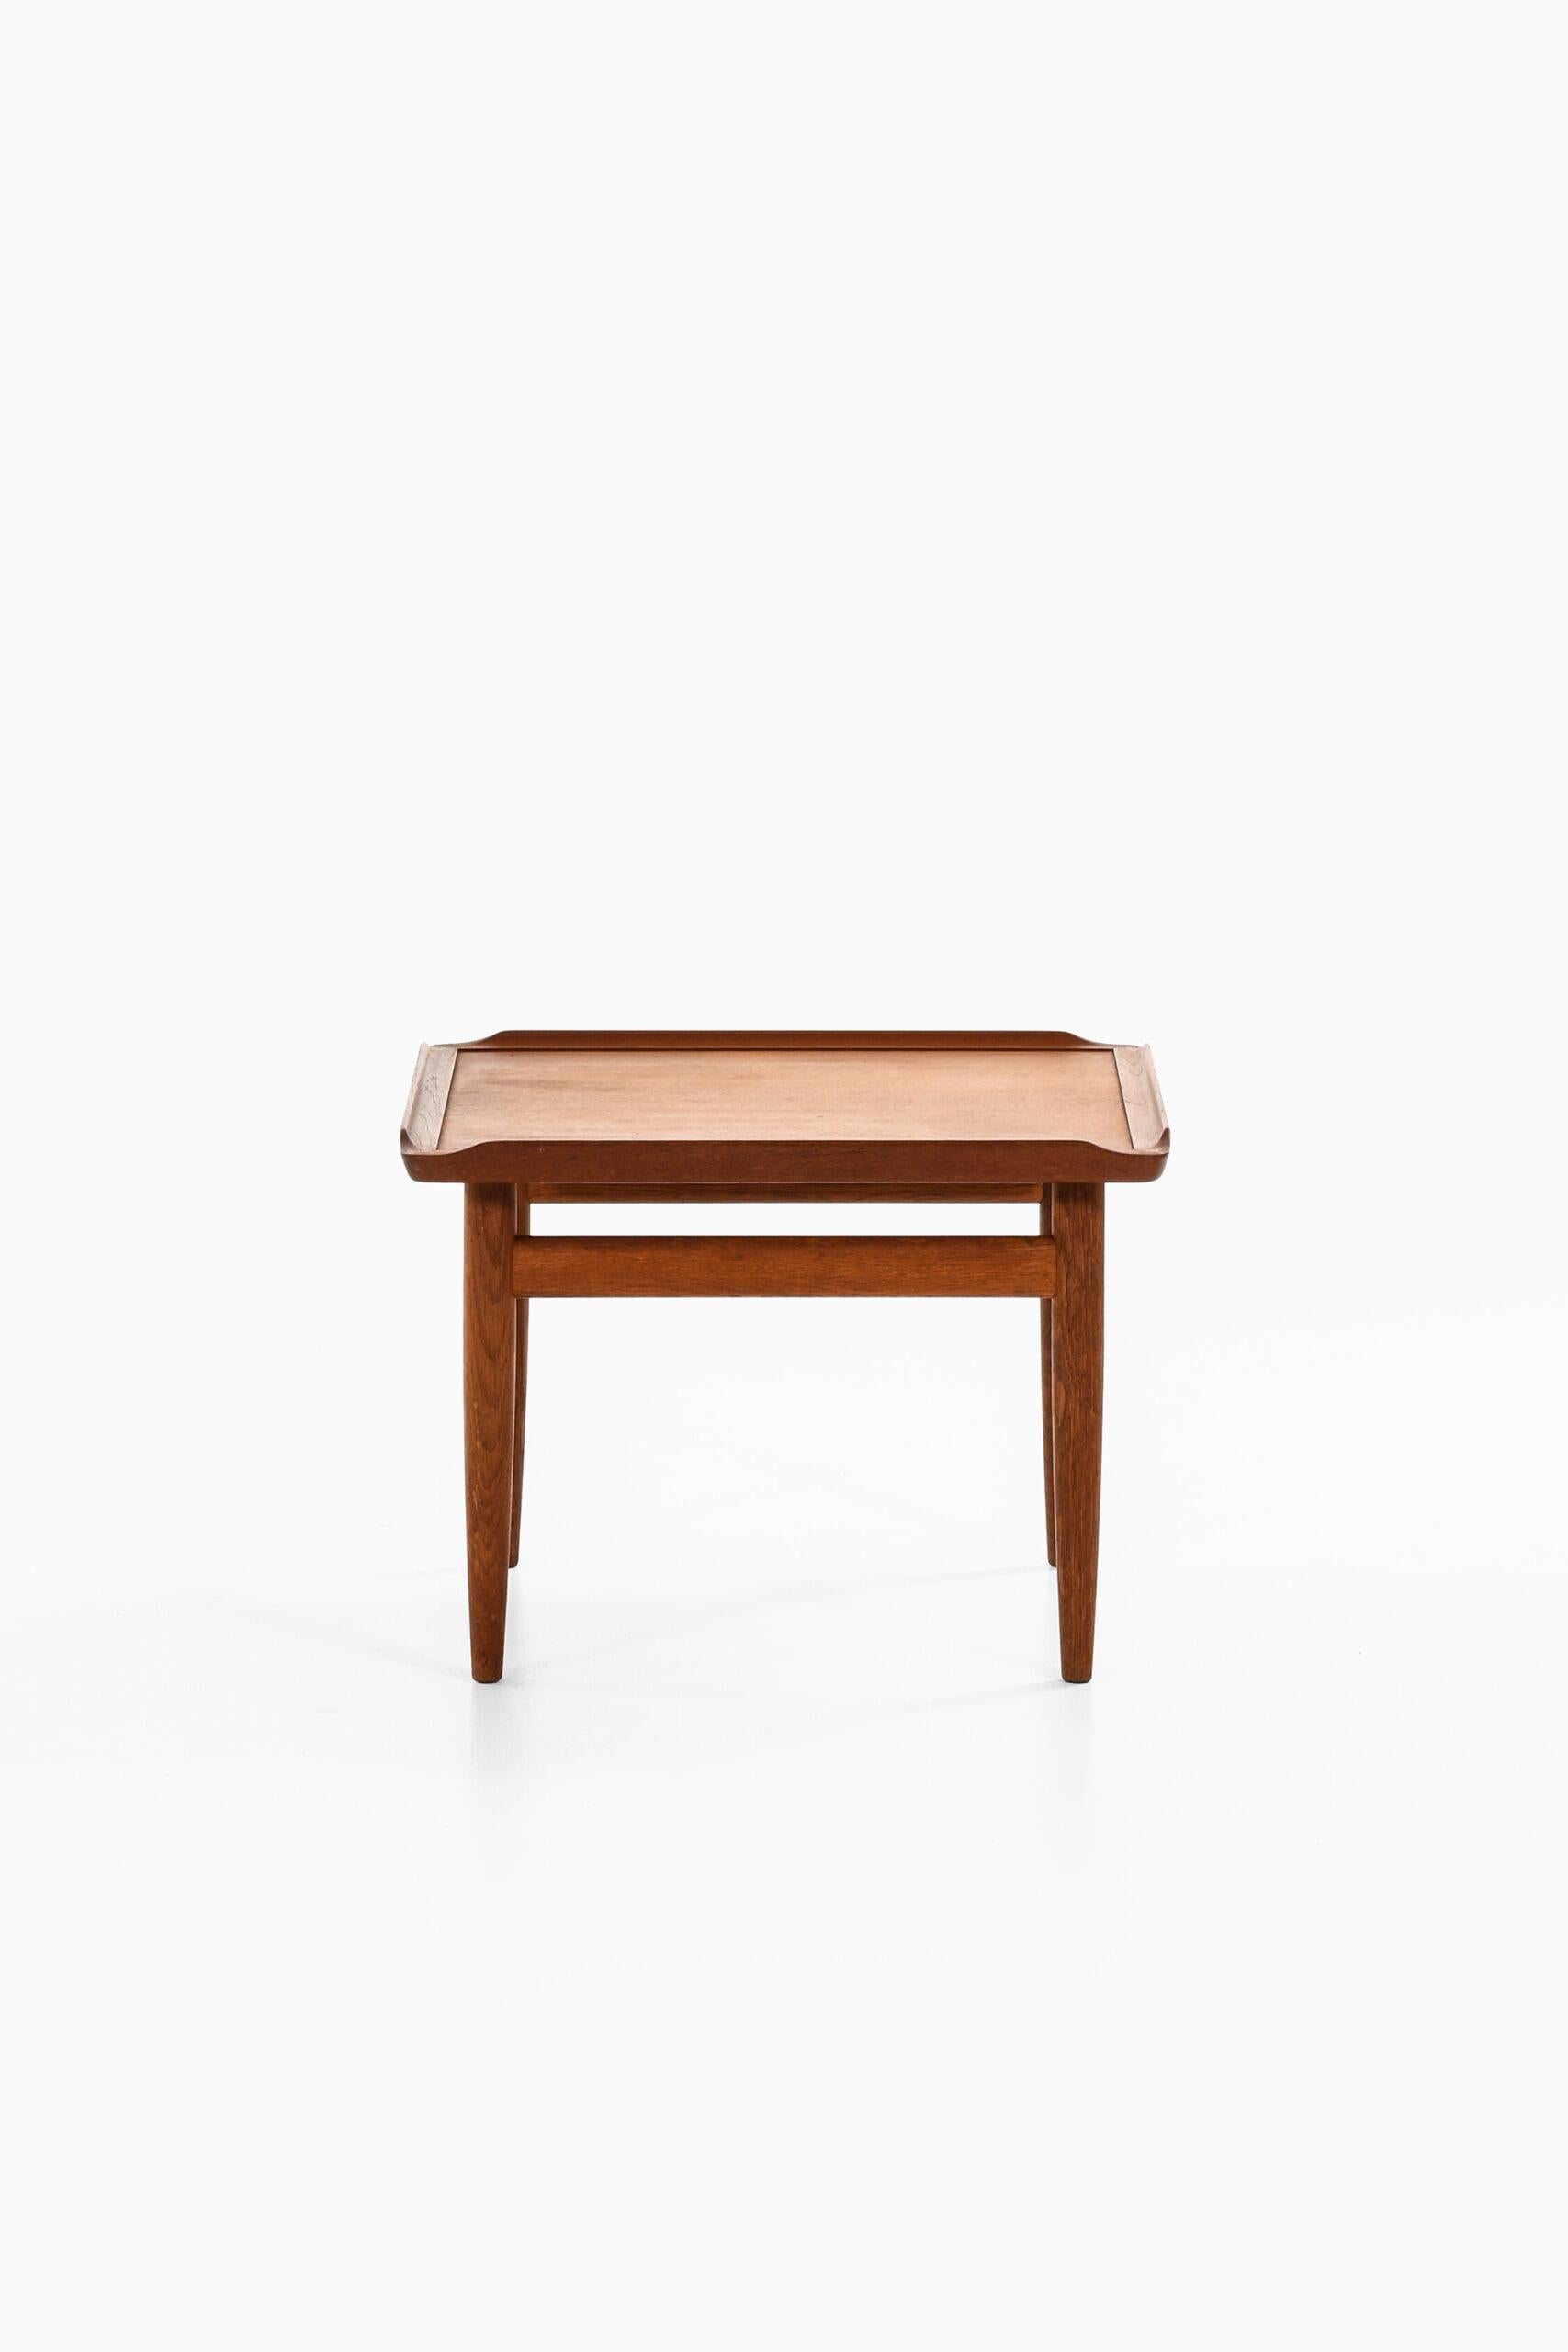 Rare side table designed by Kurt Østervig. Produced by Jason Møbler in Denmark.